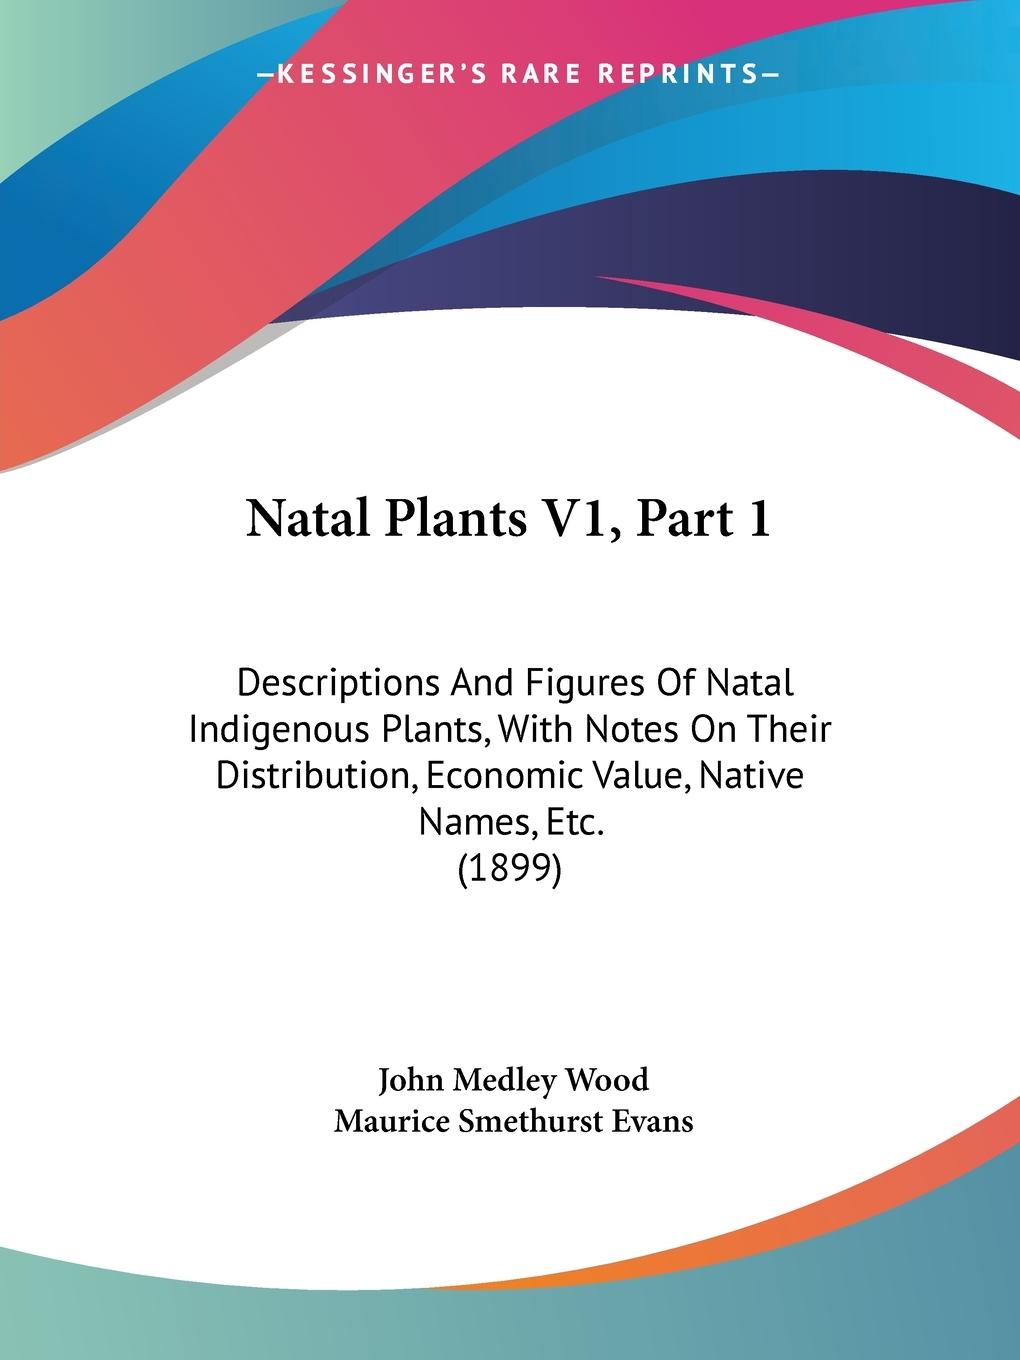 Natal Plants V1, Part 1 - Wood, John Medley Evans, Maurice Smethurst